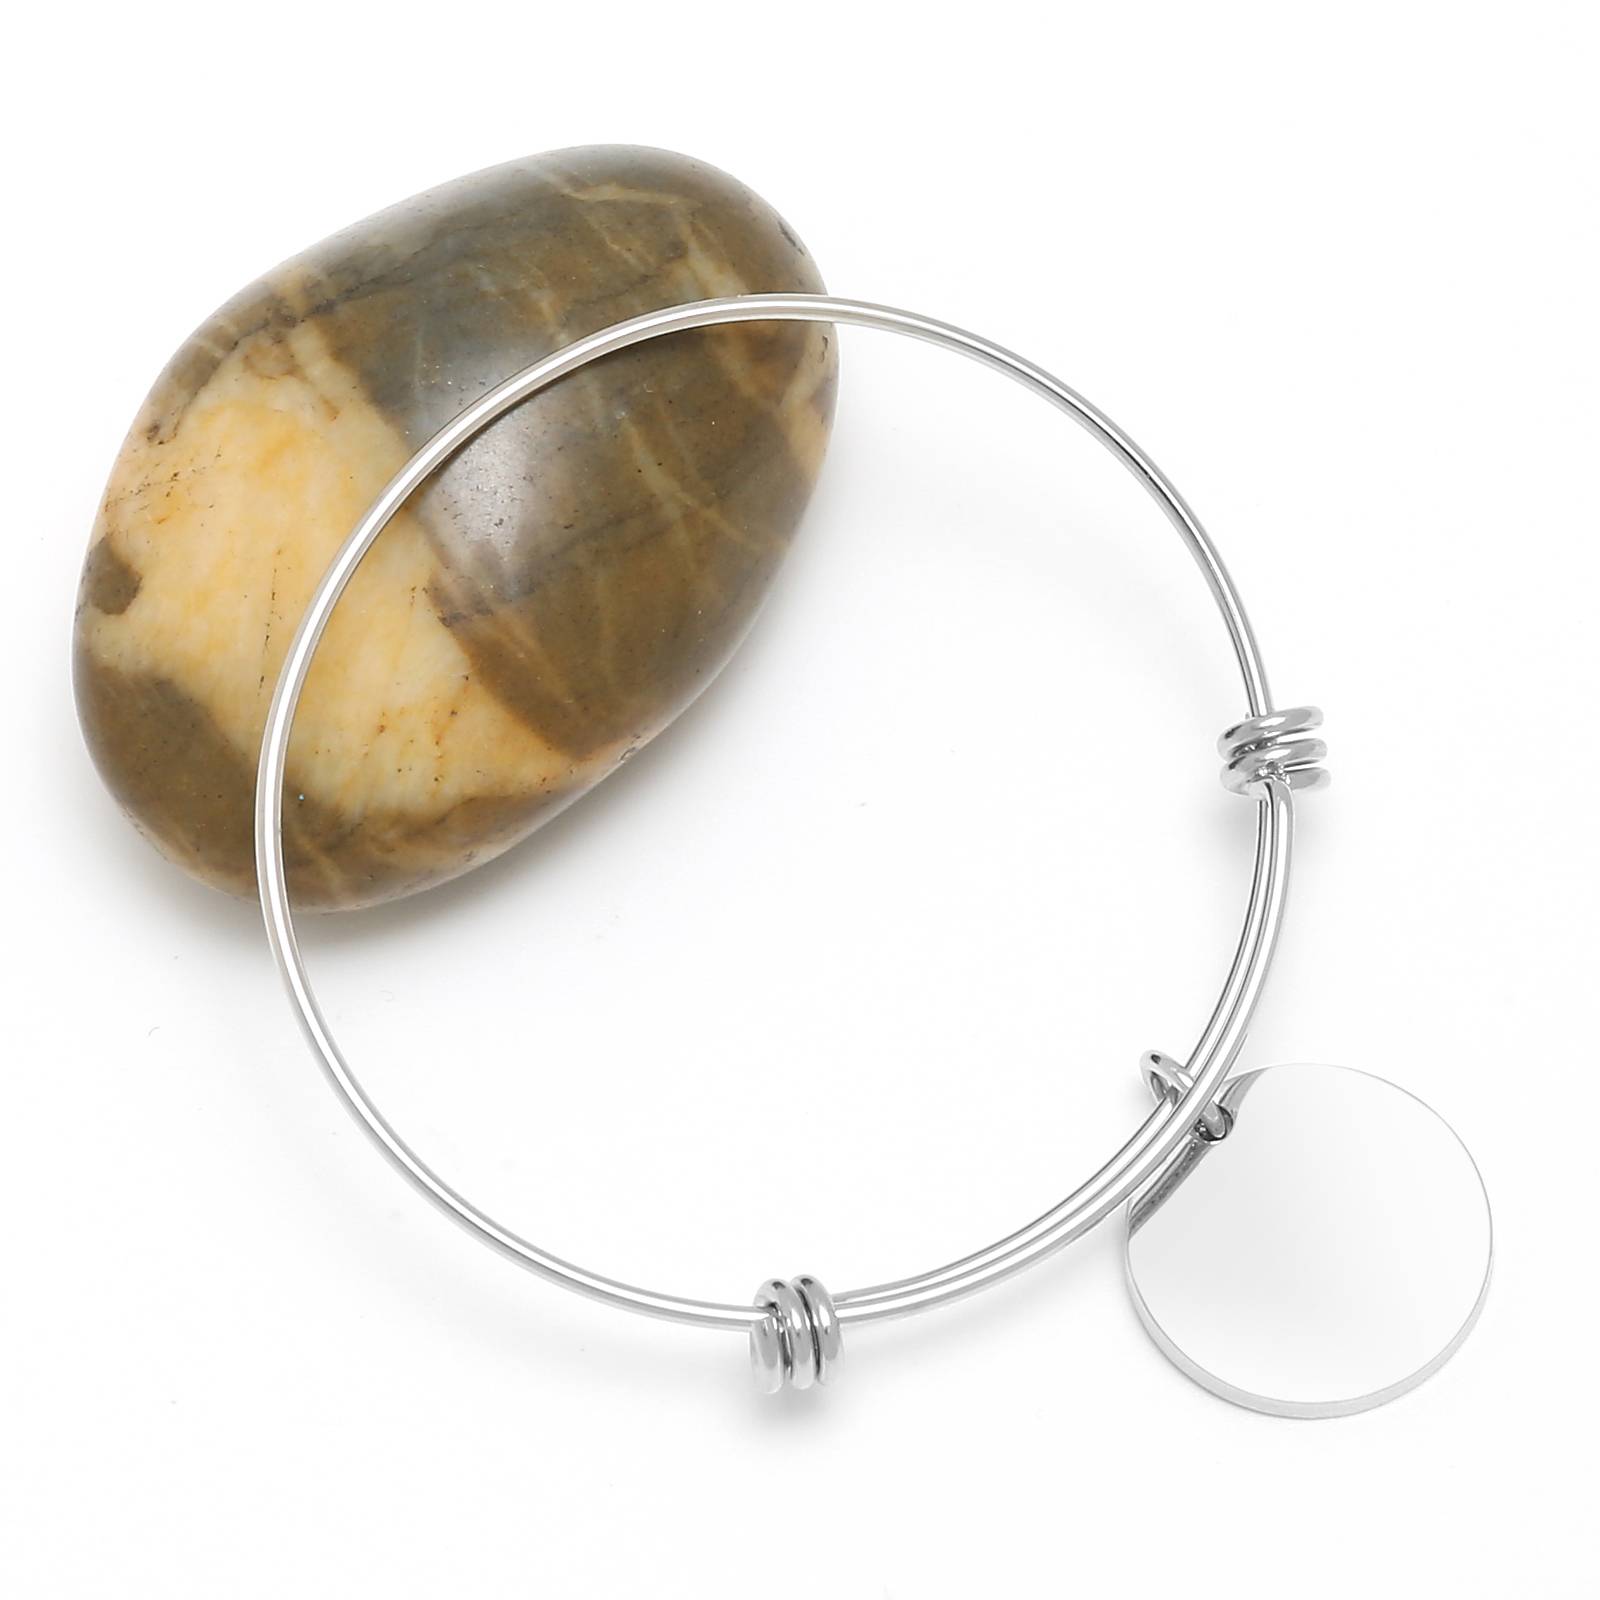  Custom jewelry blank DIY tags charm logo engraved stack thin wire adjustable bangle bracelet